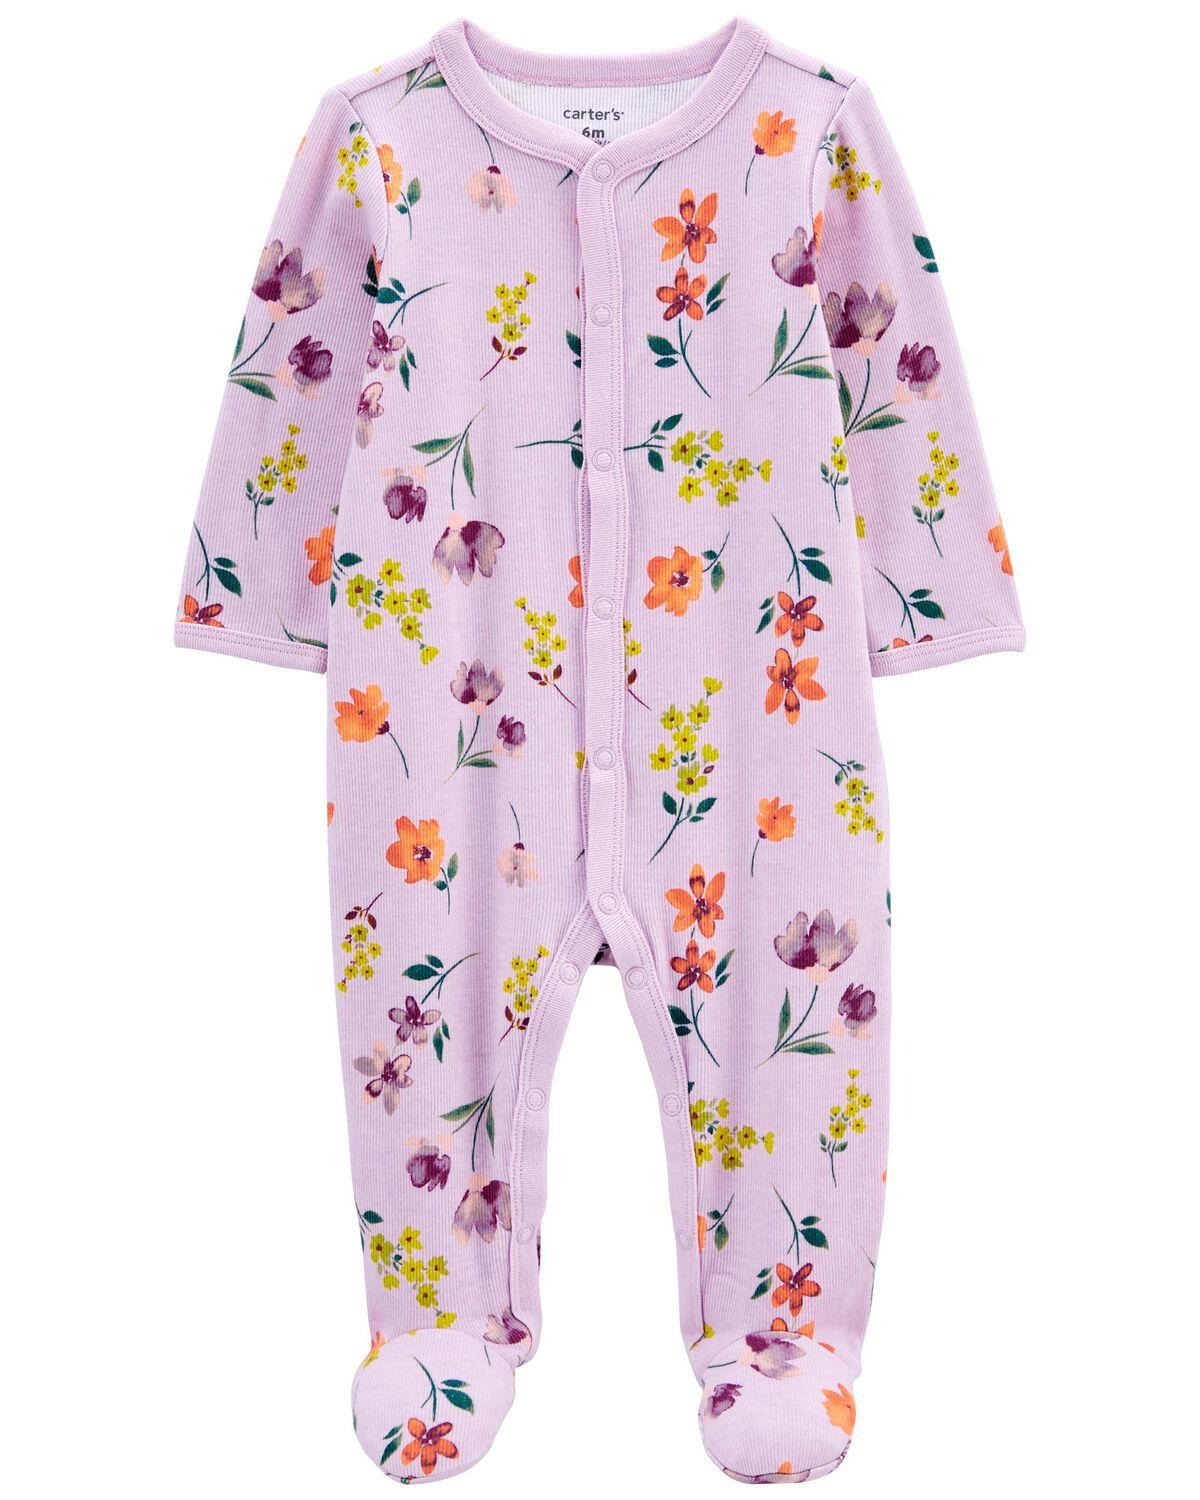 Baby Floral Snap-Up Footie Sleep & Play Pajamas | Carter's